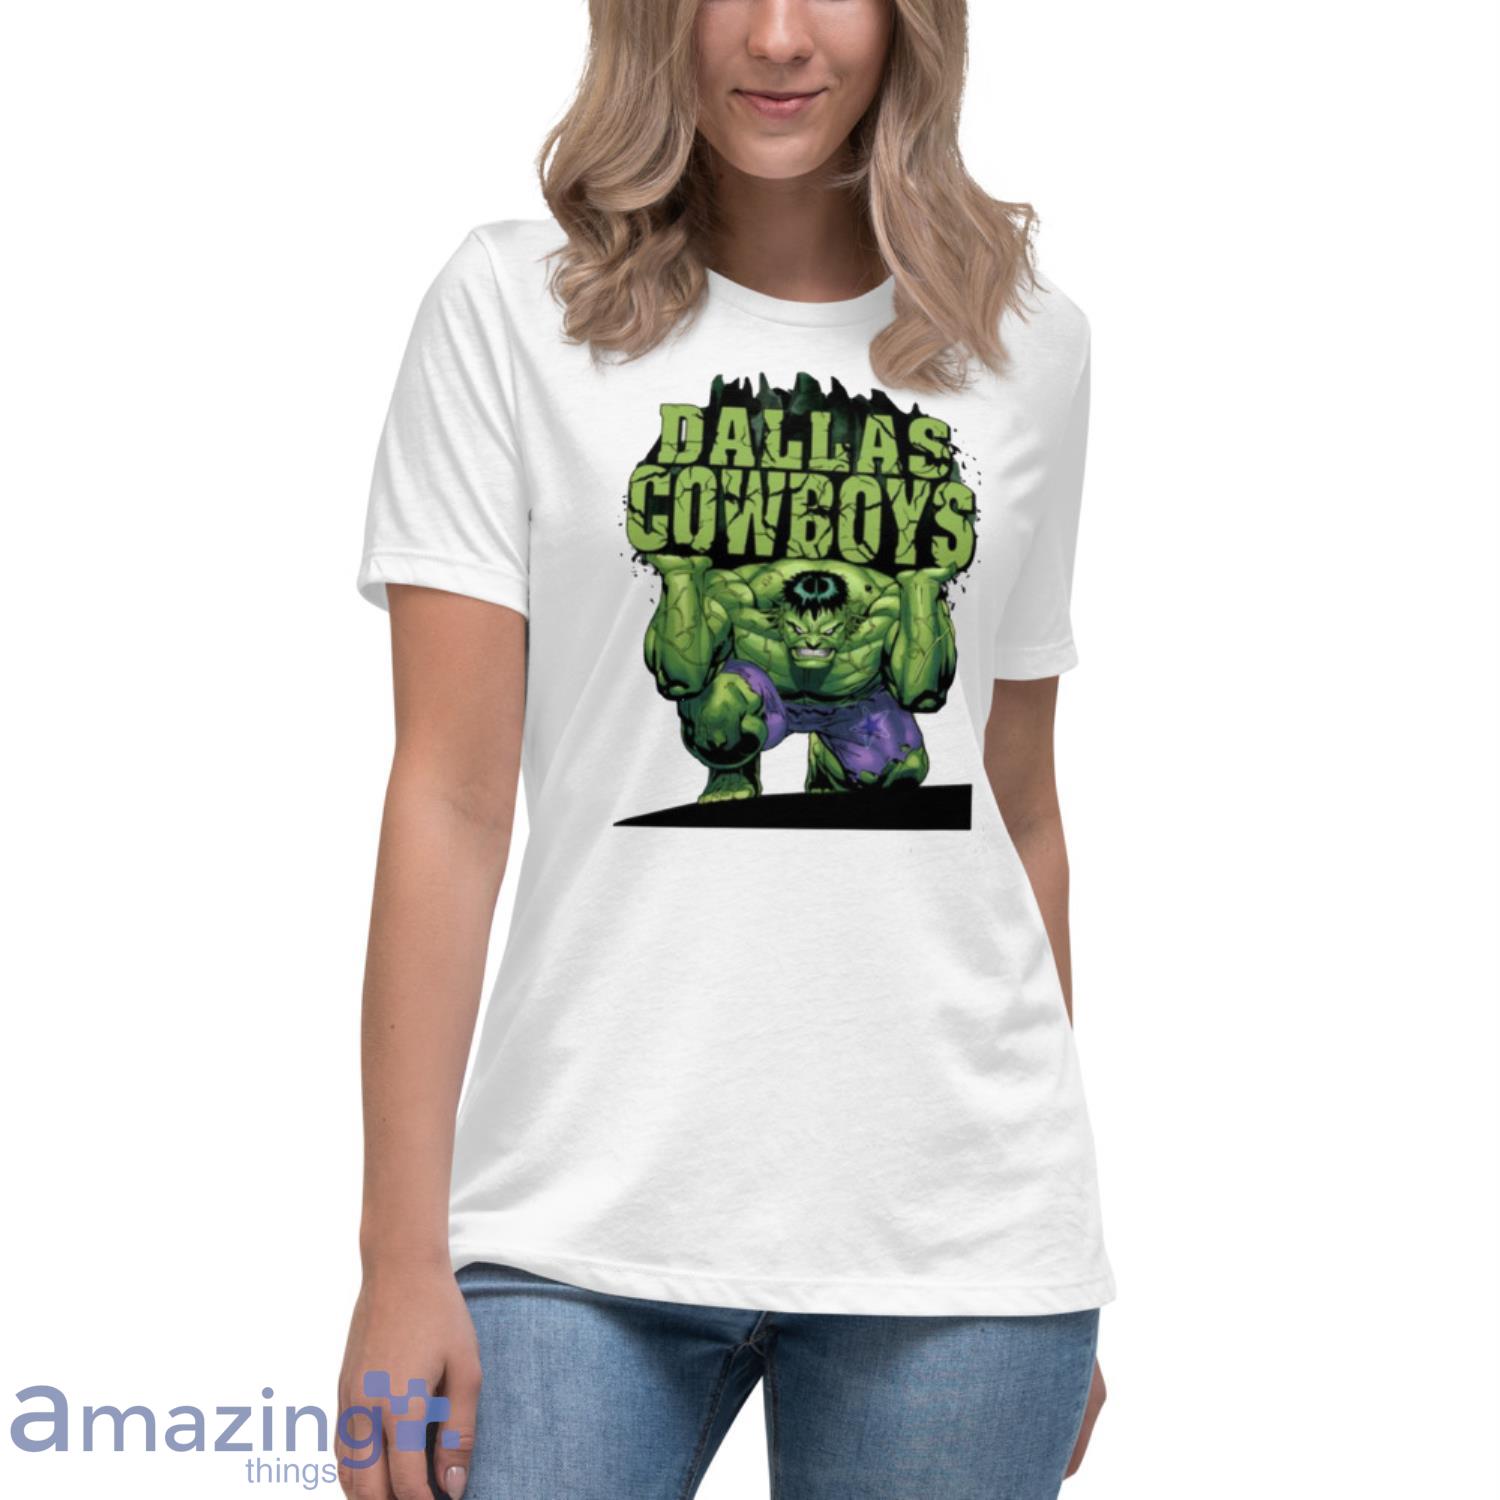 Incredible Hulk Marvel Avengers Sports NFL Team Dallas Cowboys T Shirt